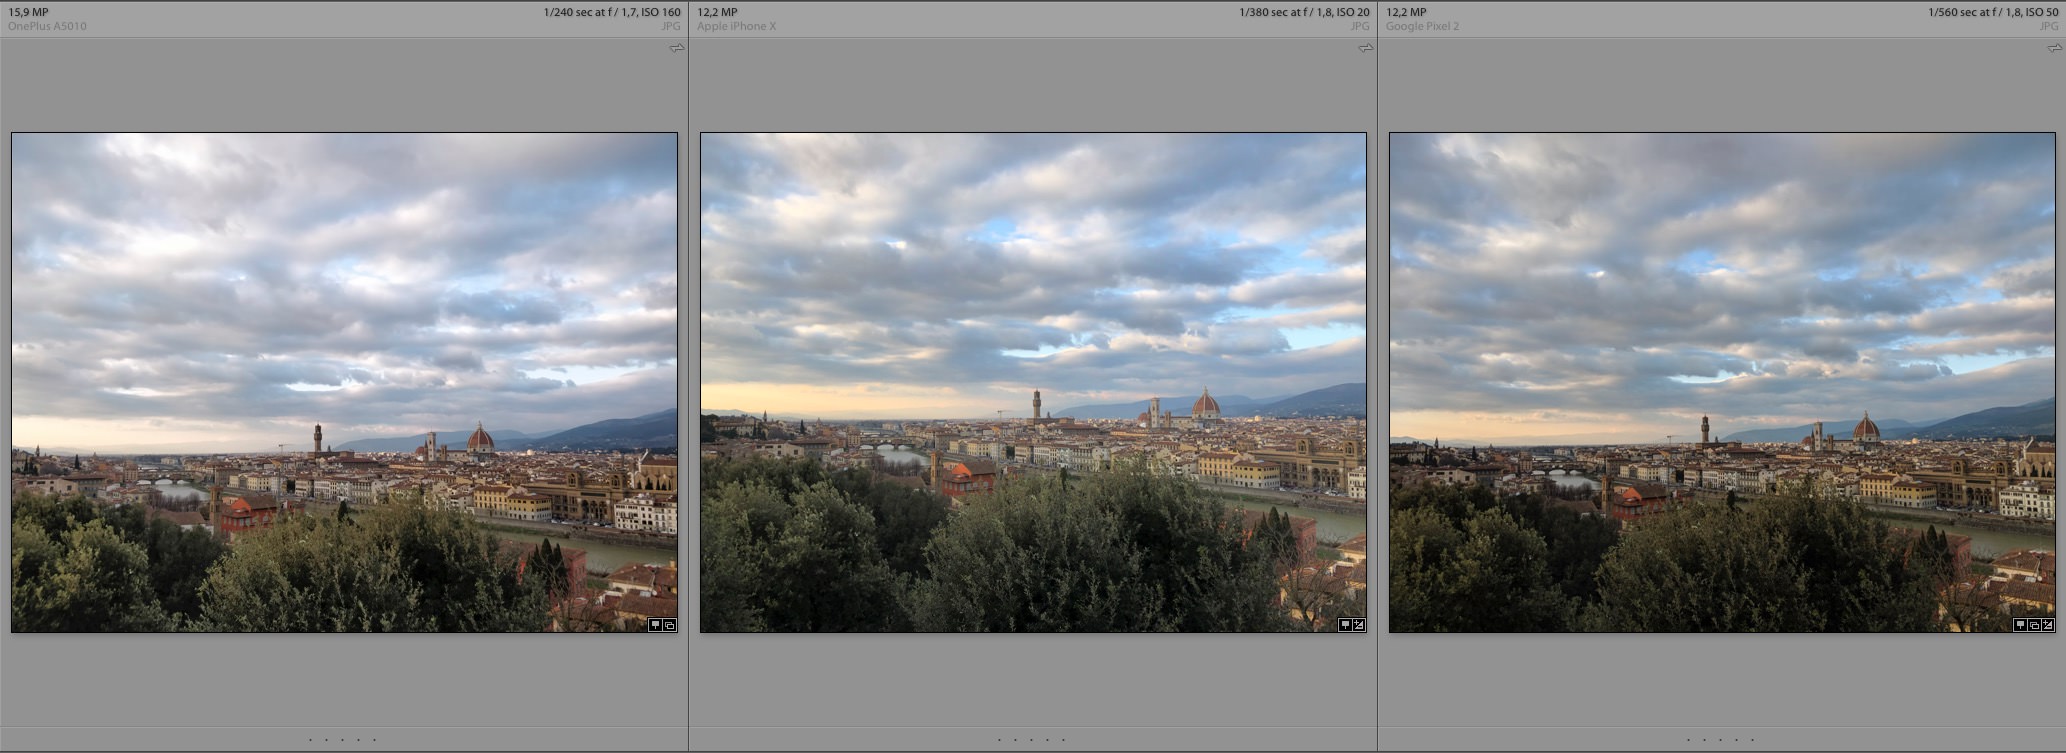 OnePlus 5t vs iPhoneX vs Google Pixel 2 Daylight Photography